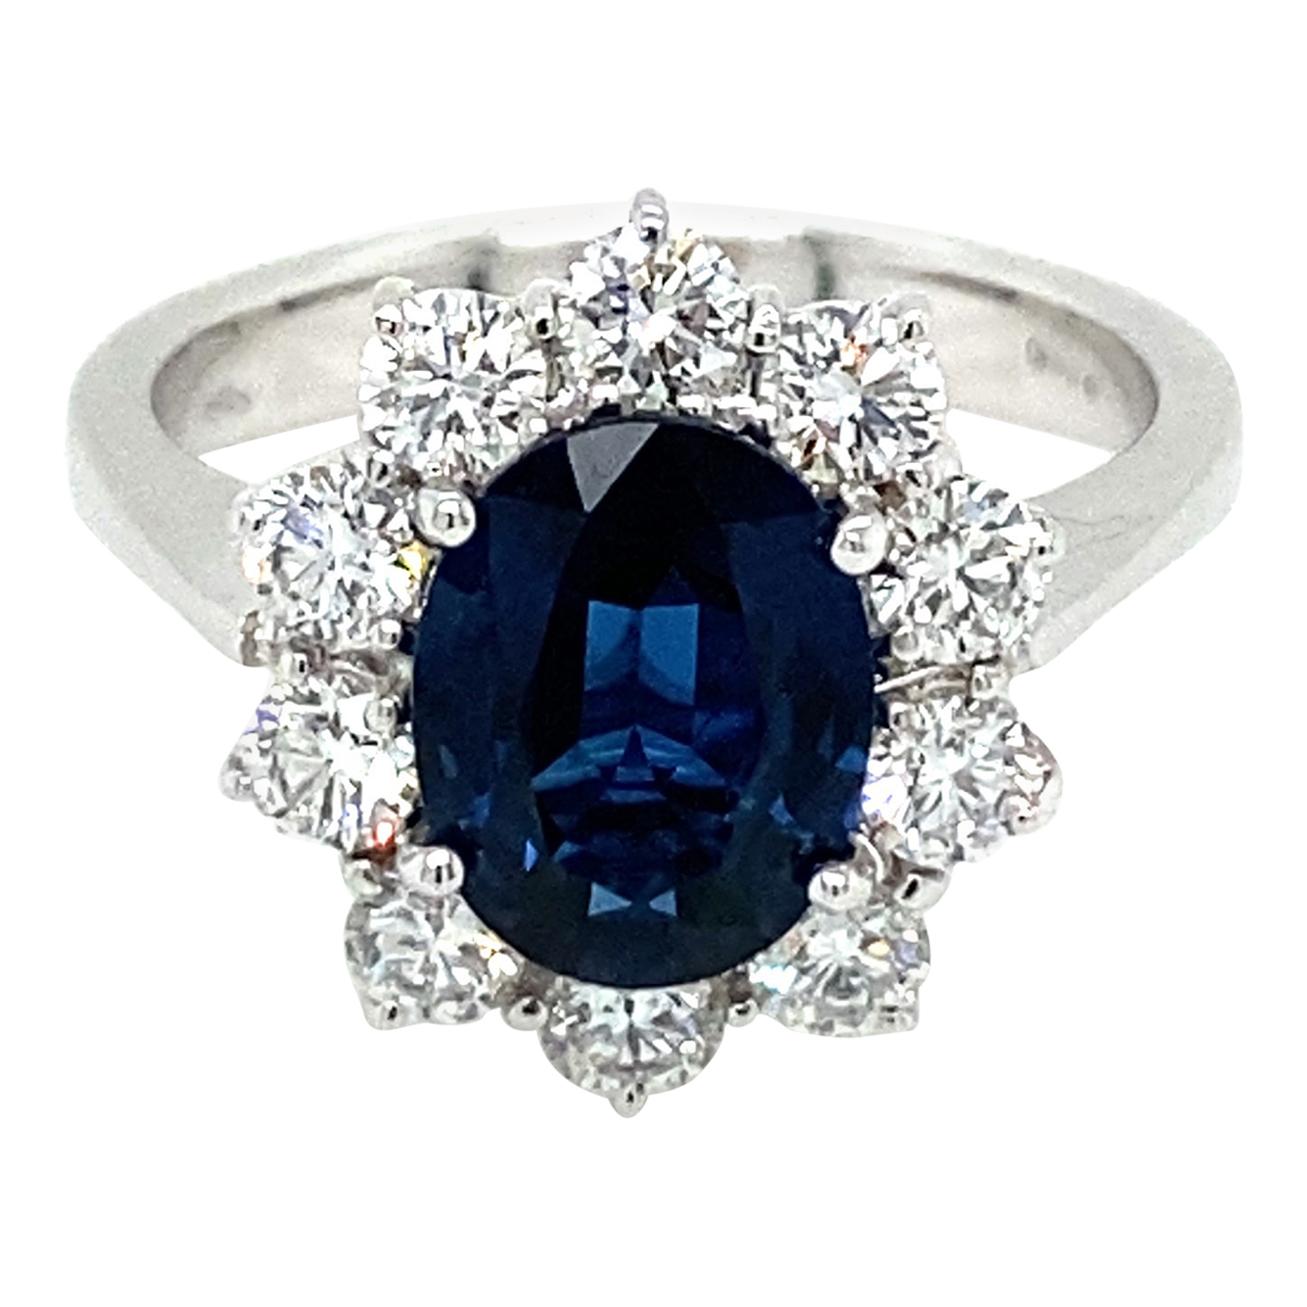 Certified 2.10 Carat Unheated Burma Sapphire Diamond Engagement Ring